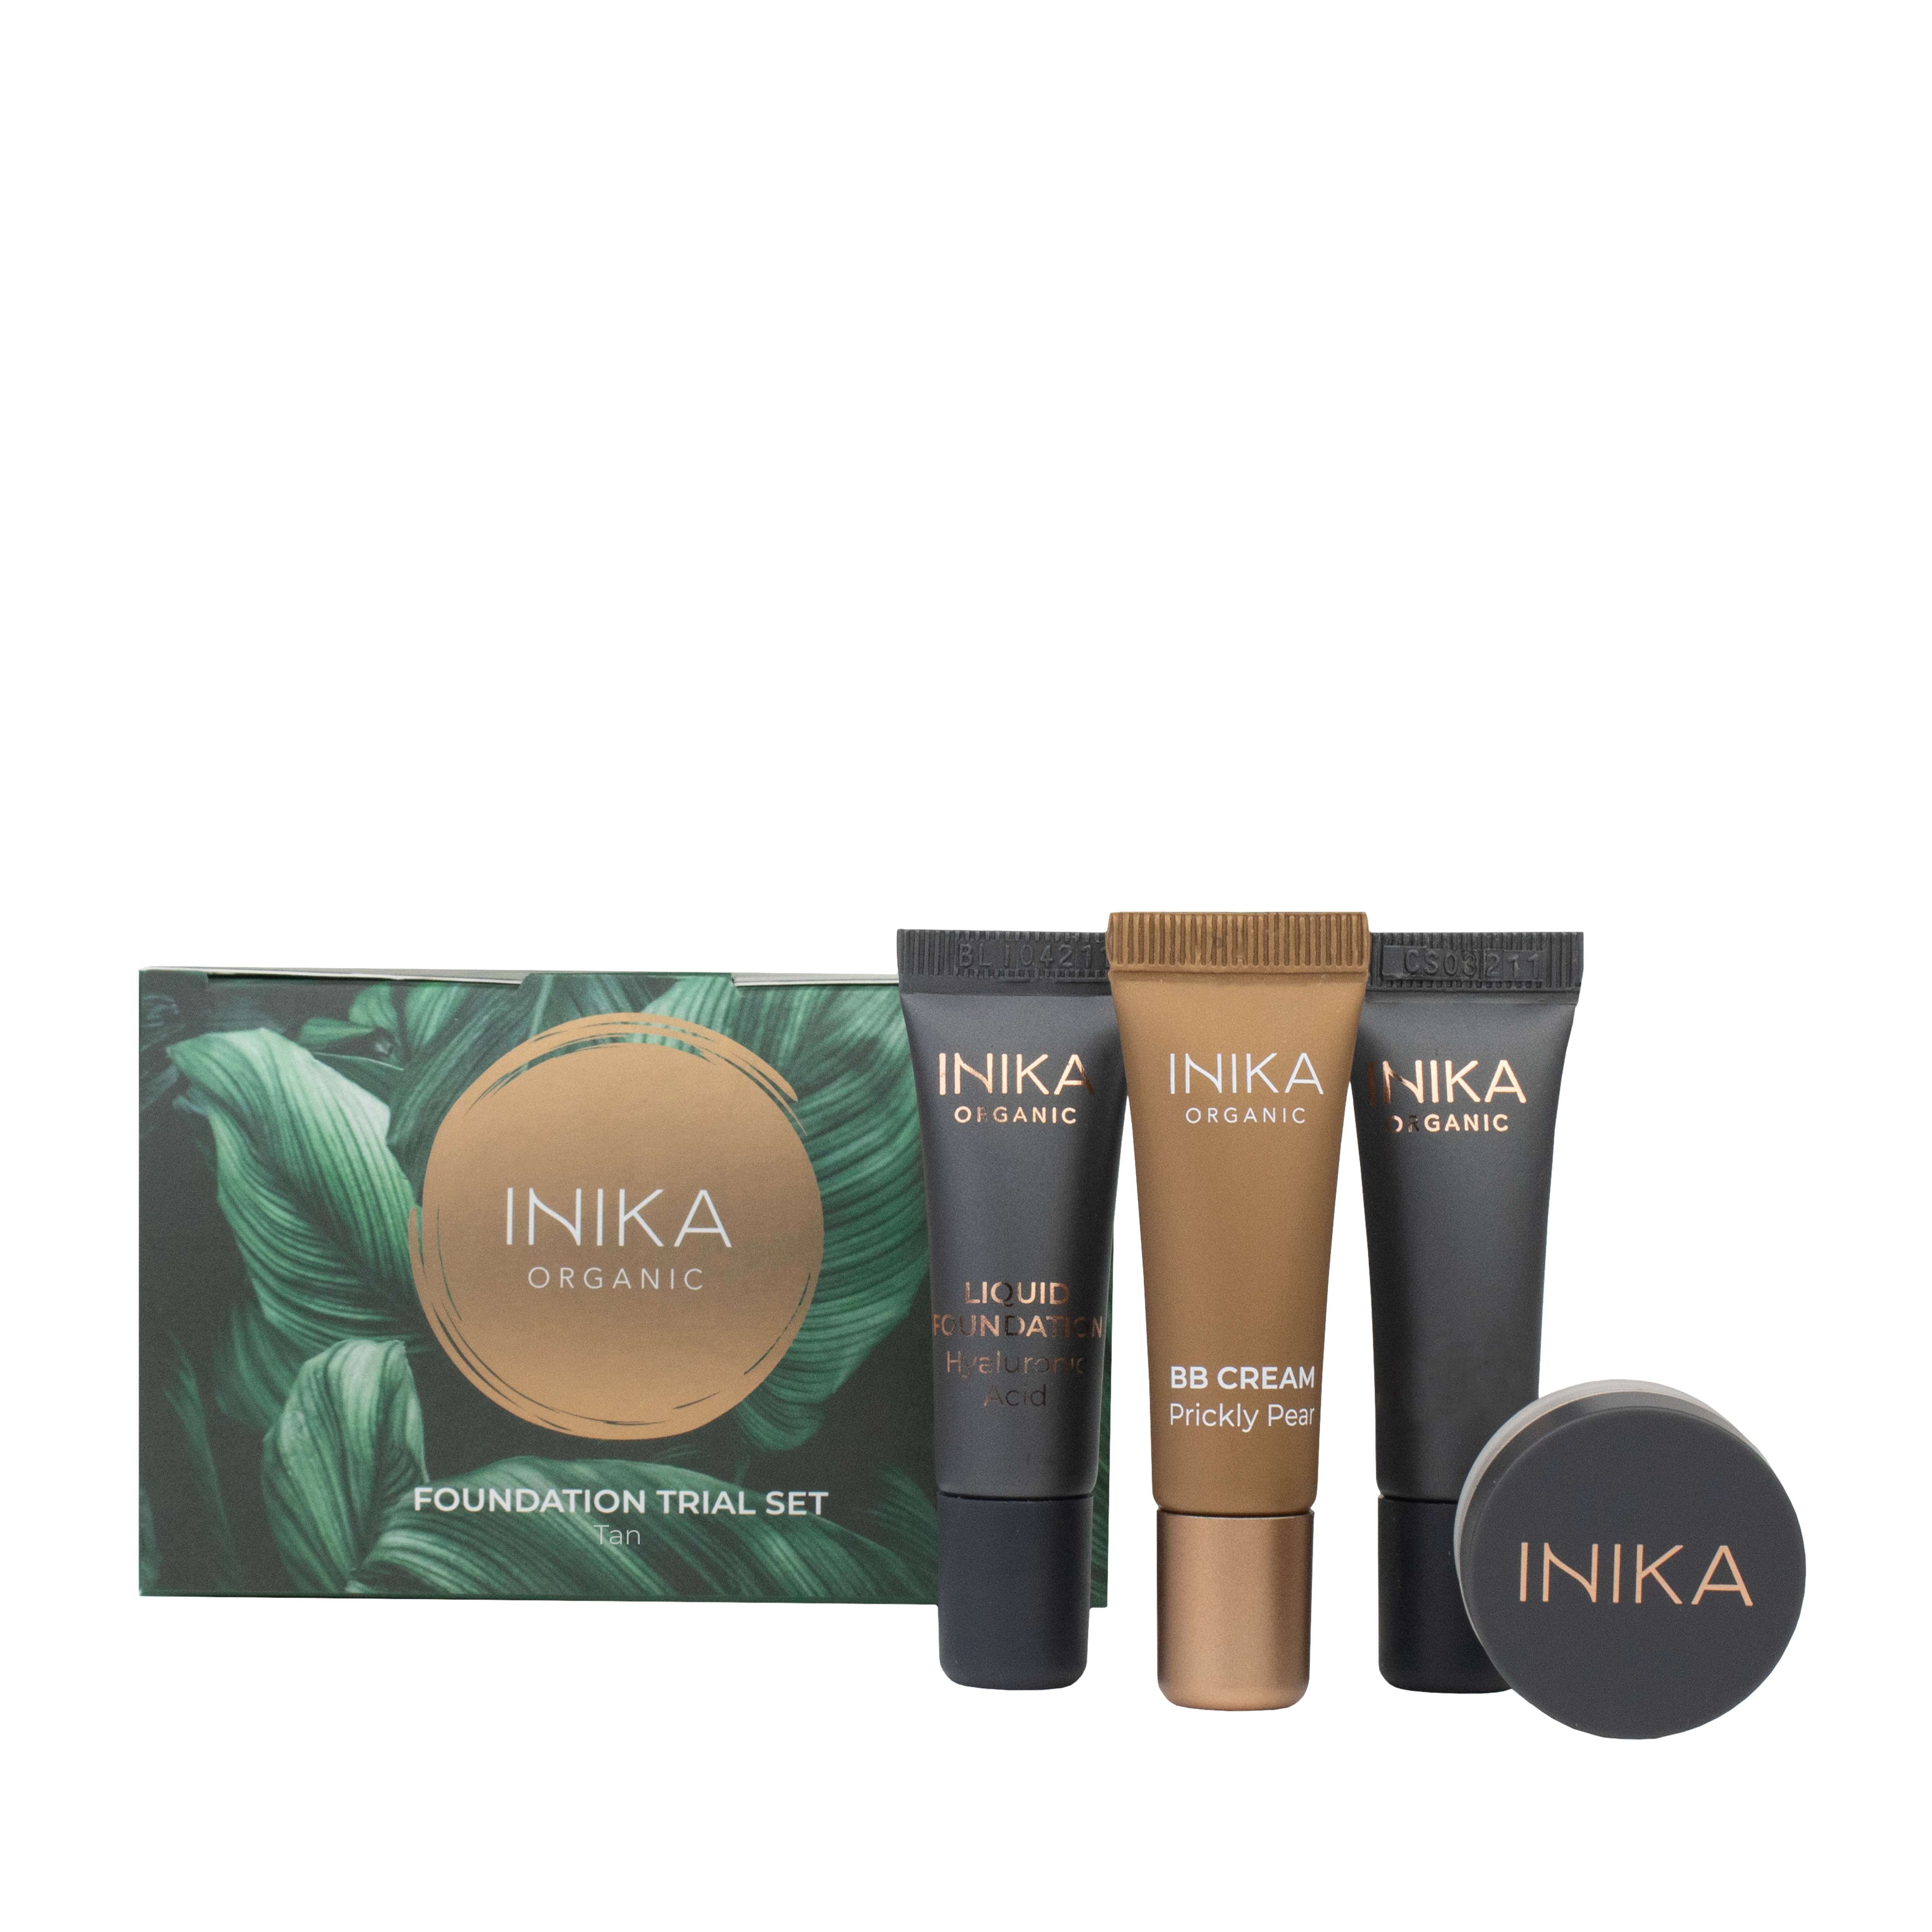 INIKA Organic Foundation Trial Set in Tan